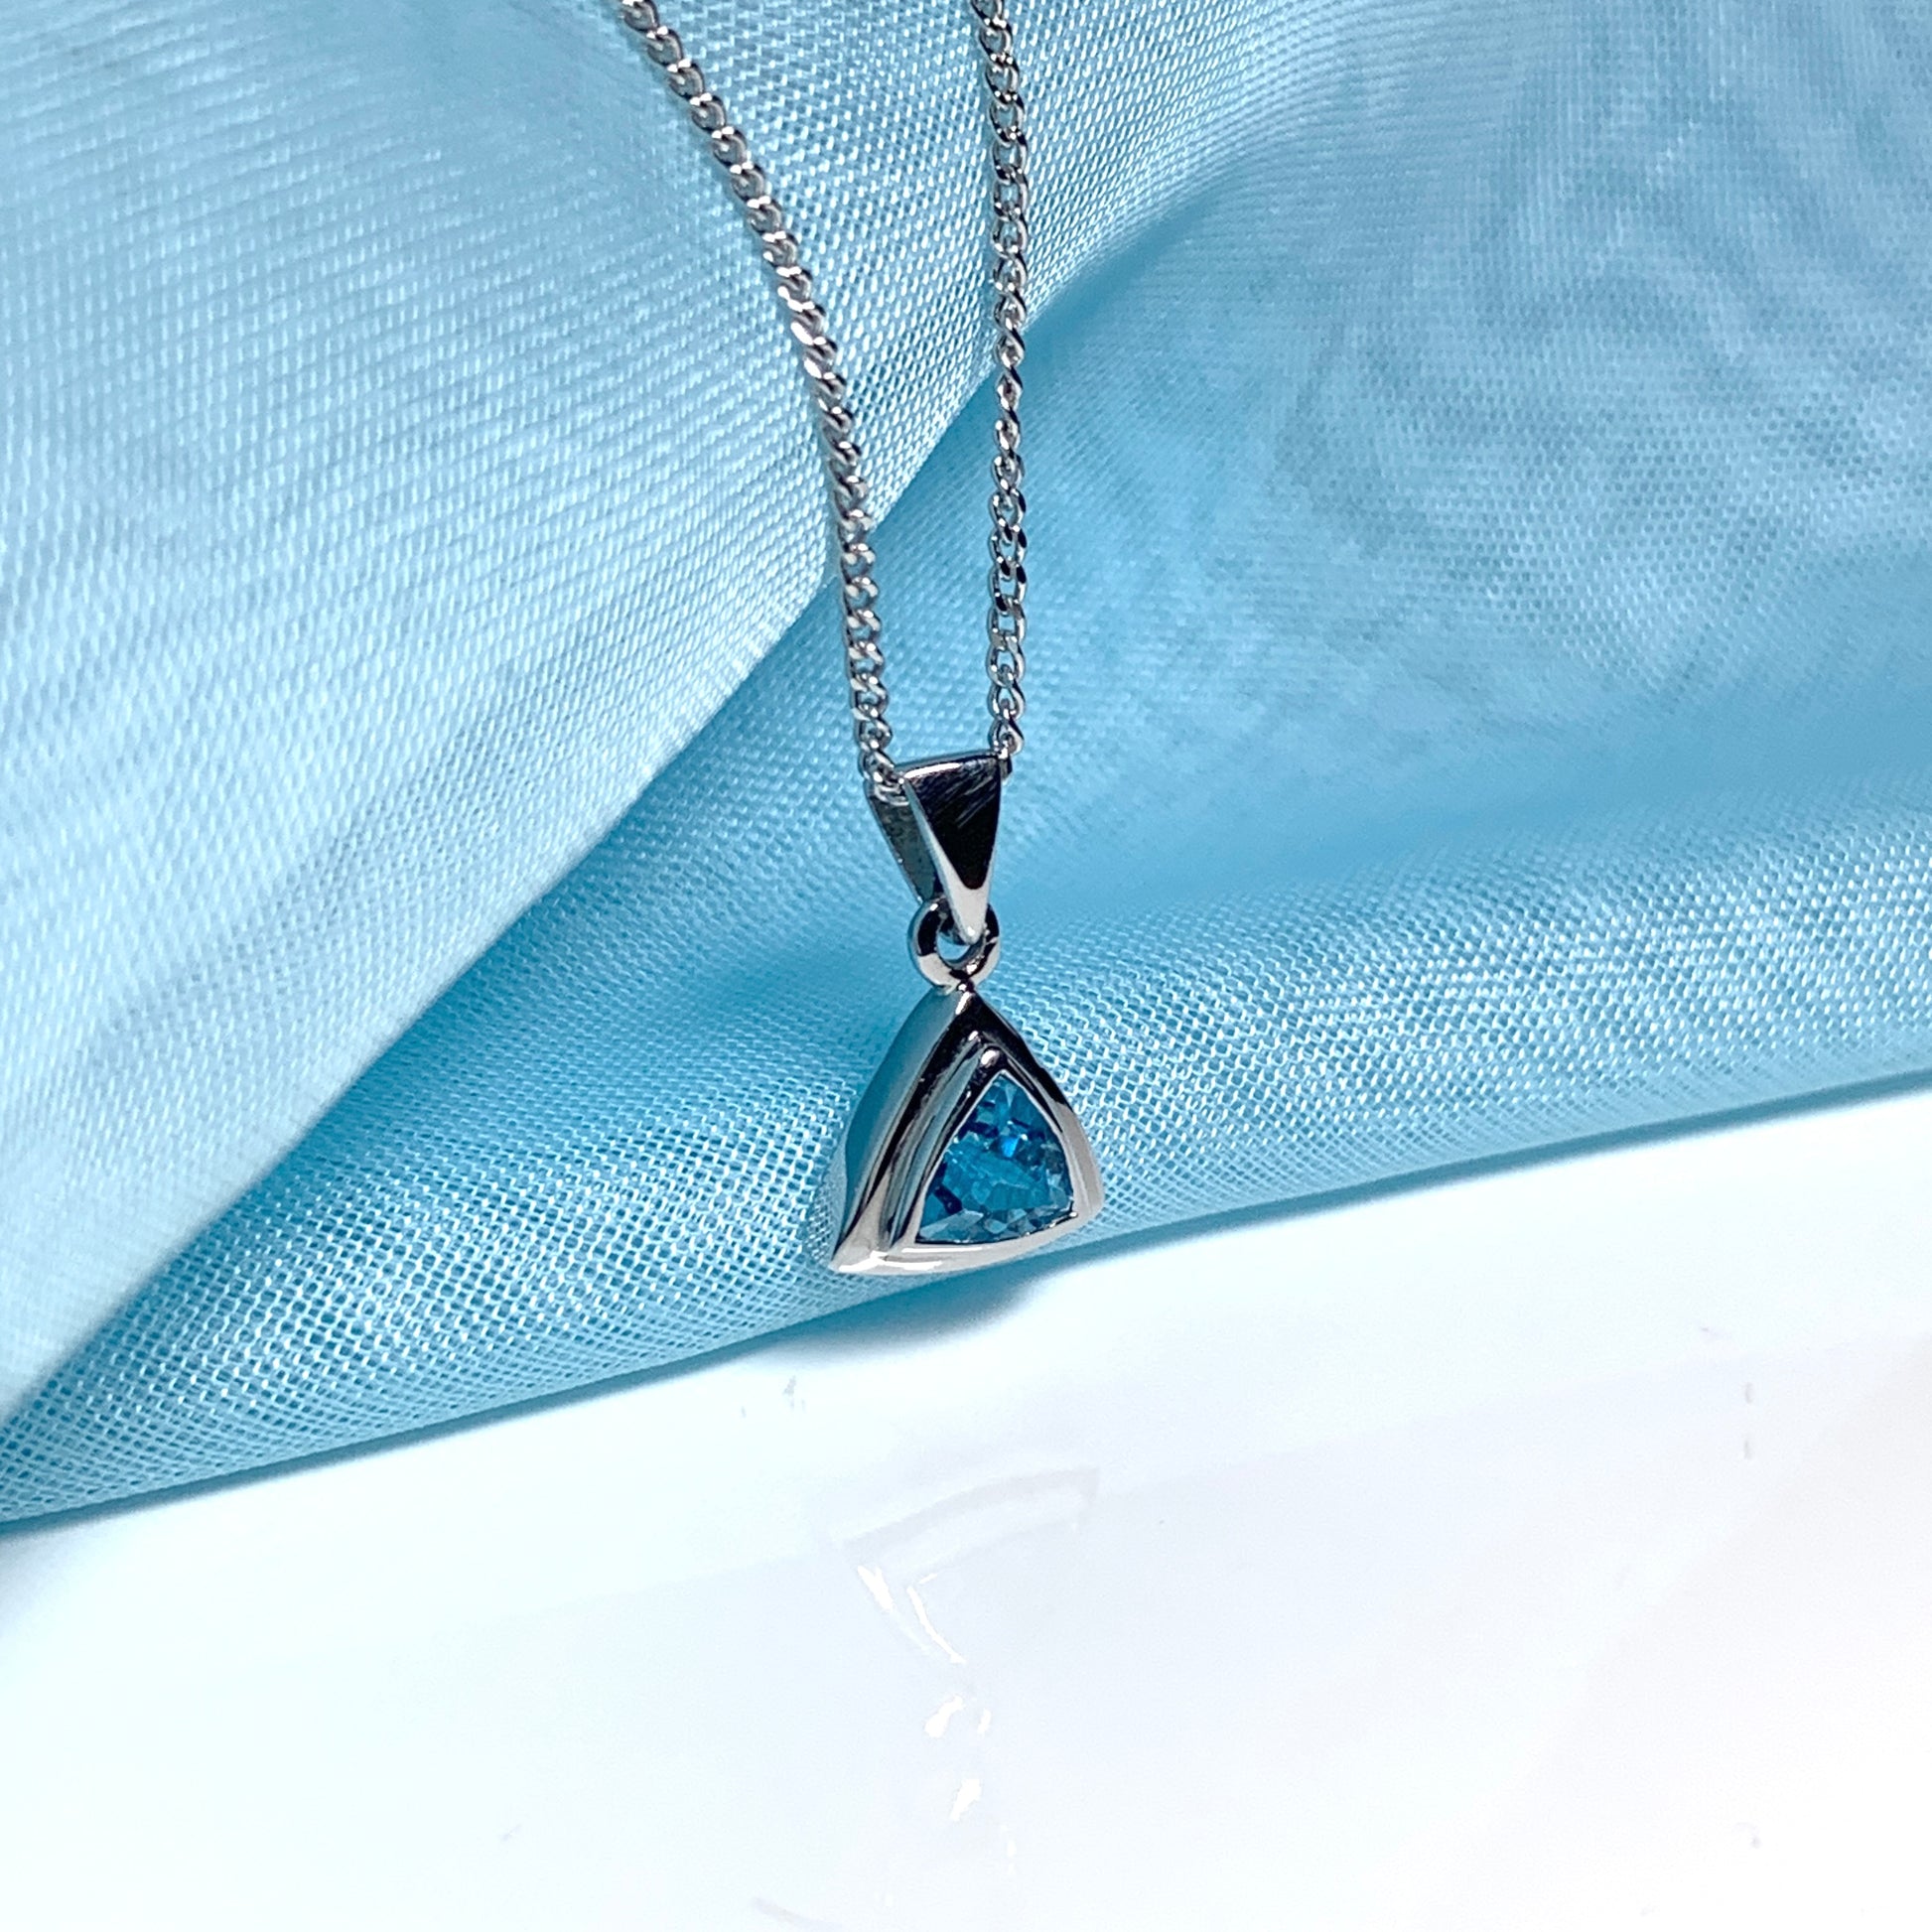 Blue Topaz necklace white gold triangle shaped pendant